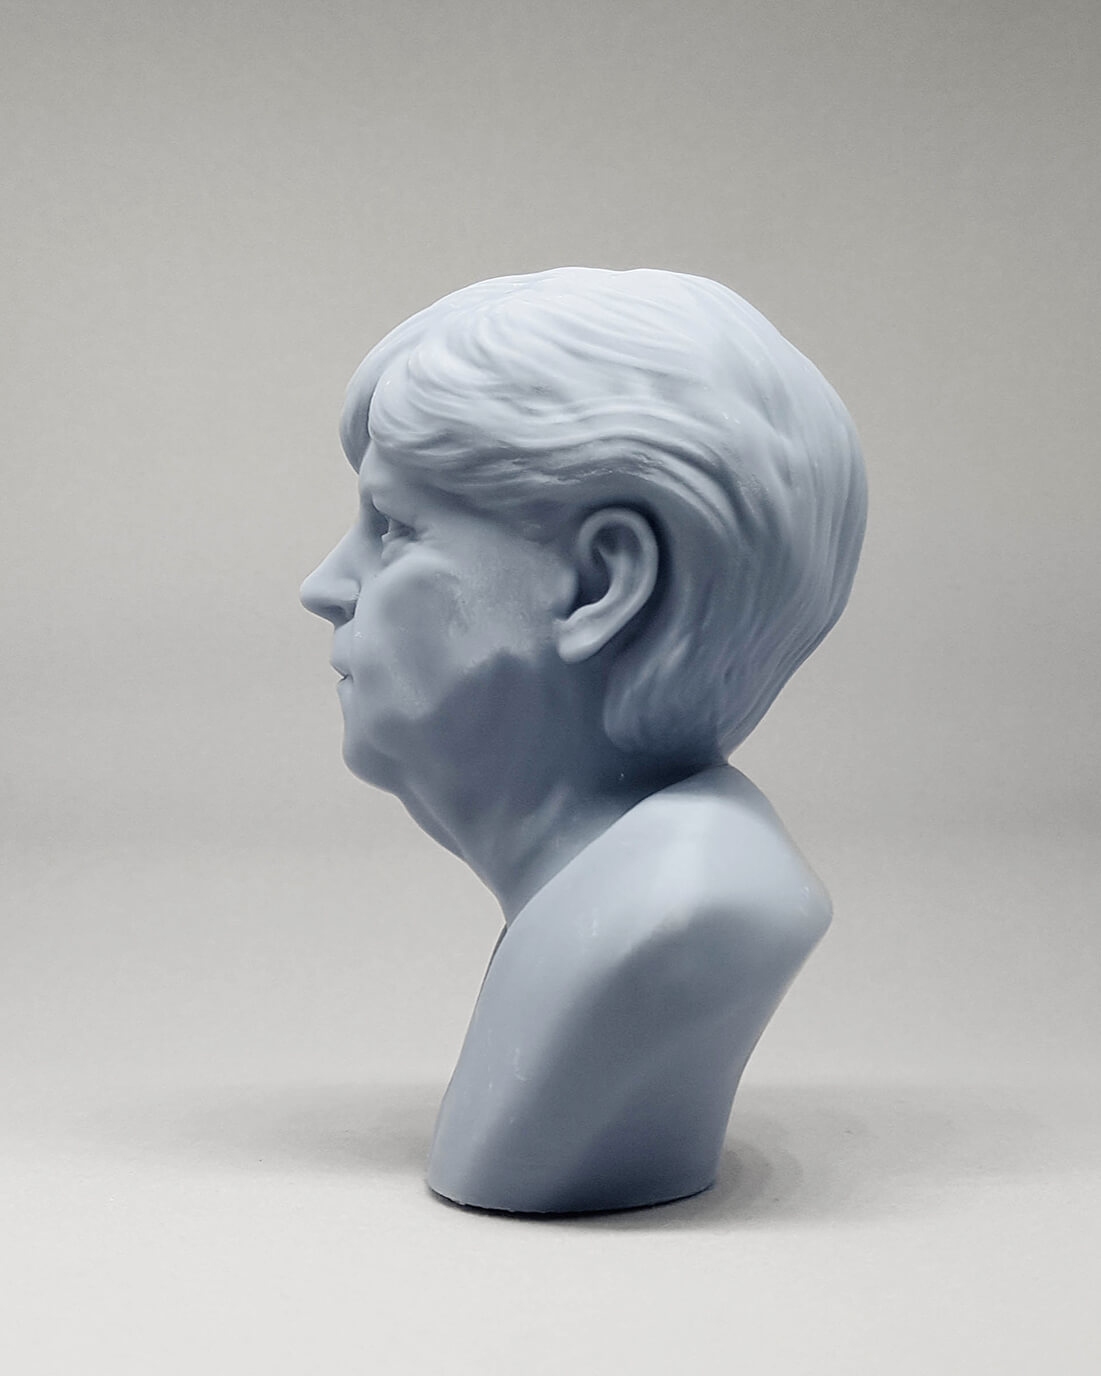 Customized 3D Printed Sculpture